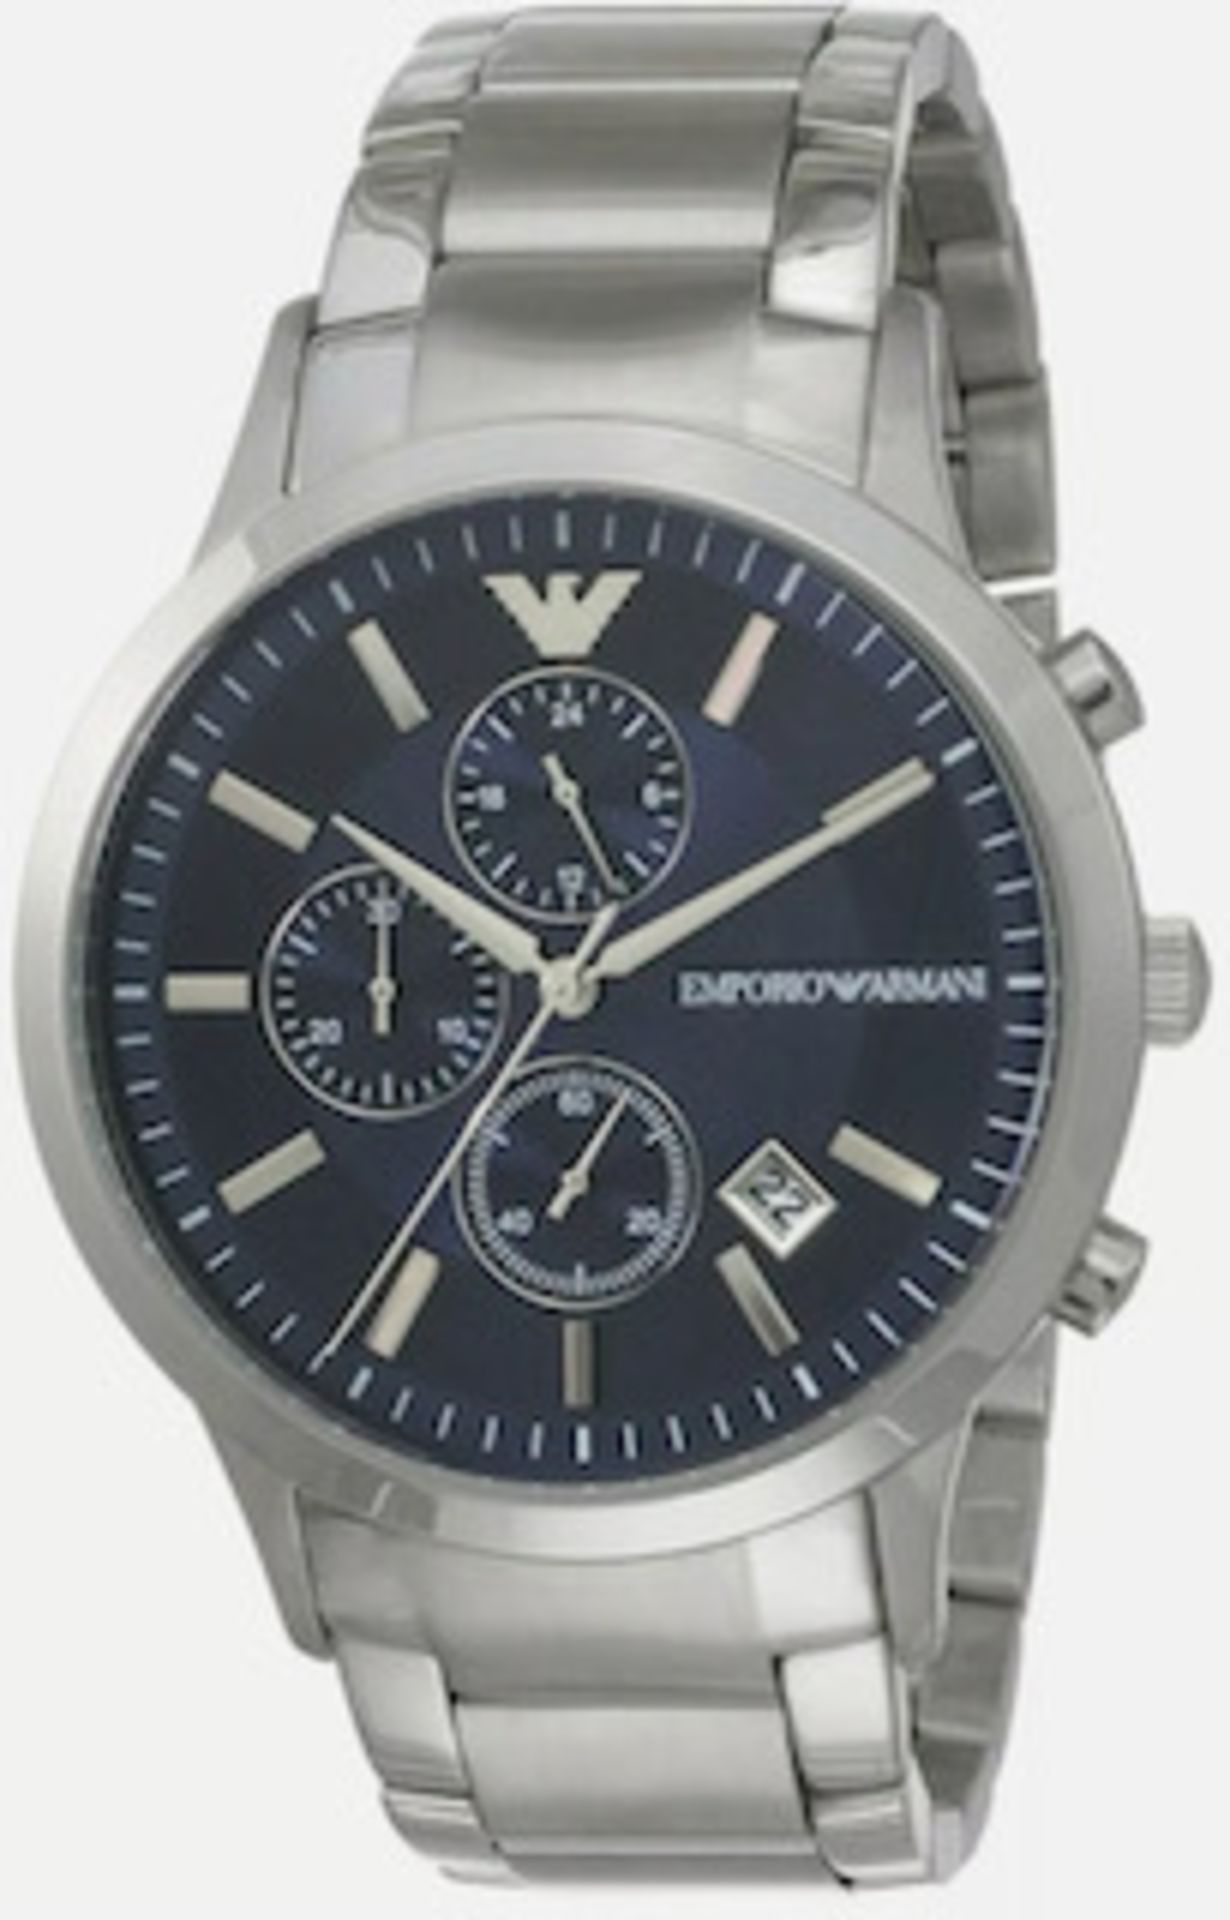 Emporio Armani AR11164 Men's Blue Dial Silver Bracelet Chronograph Watch - Image 4 of 6